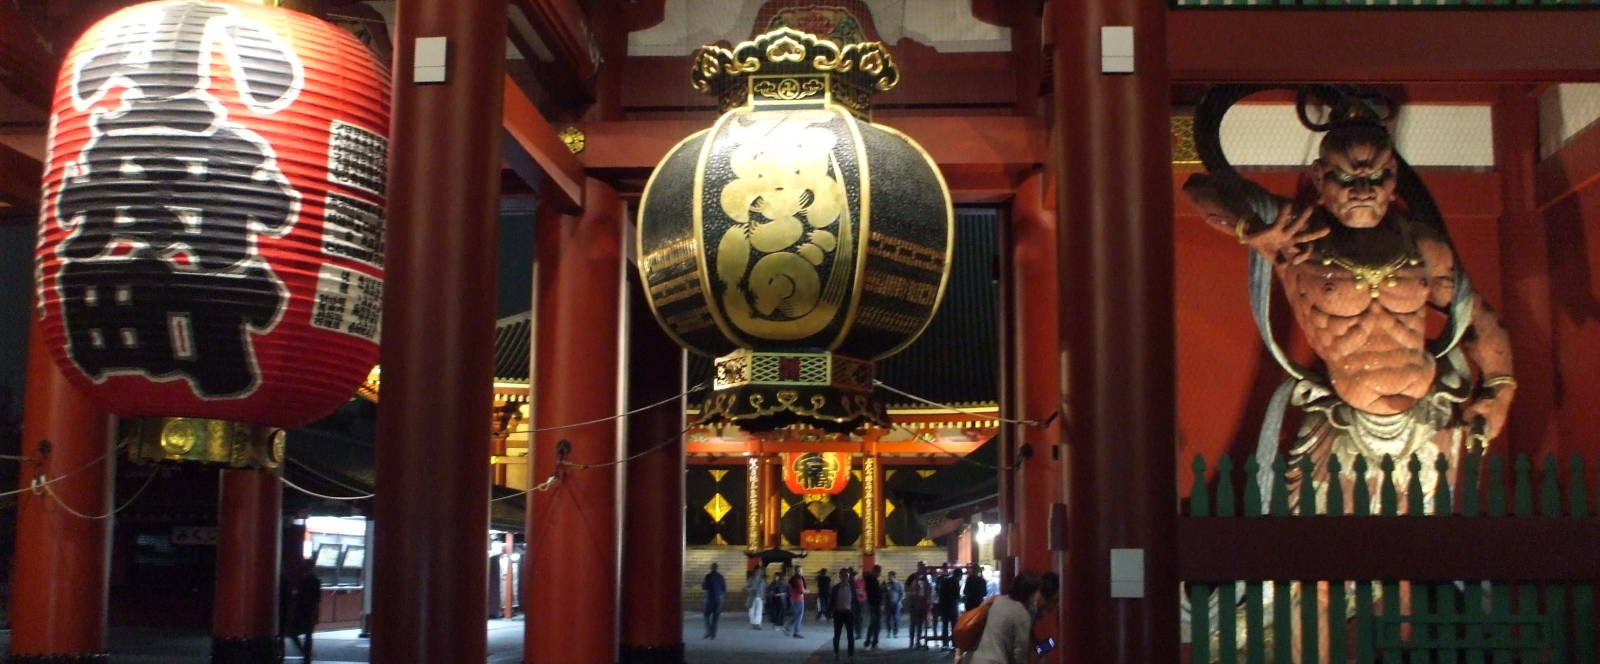 Hōzōmon, the inner gate of the Sensō-ji Buddhist temple at Asakusa, Tōkyō